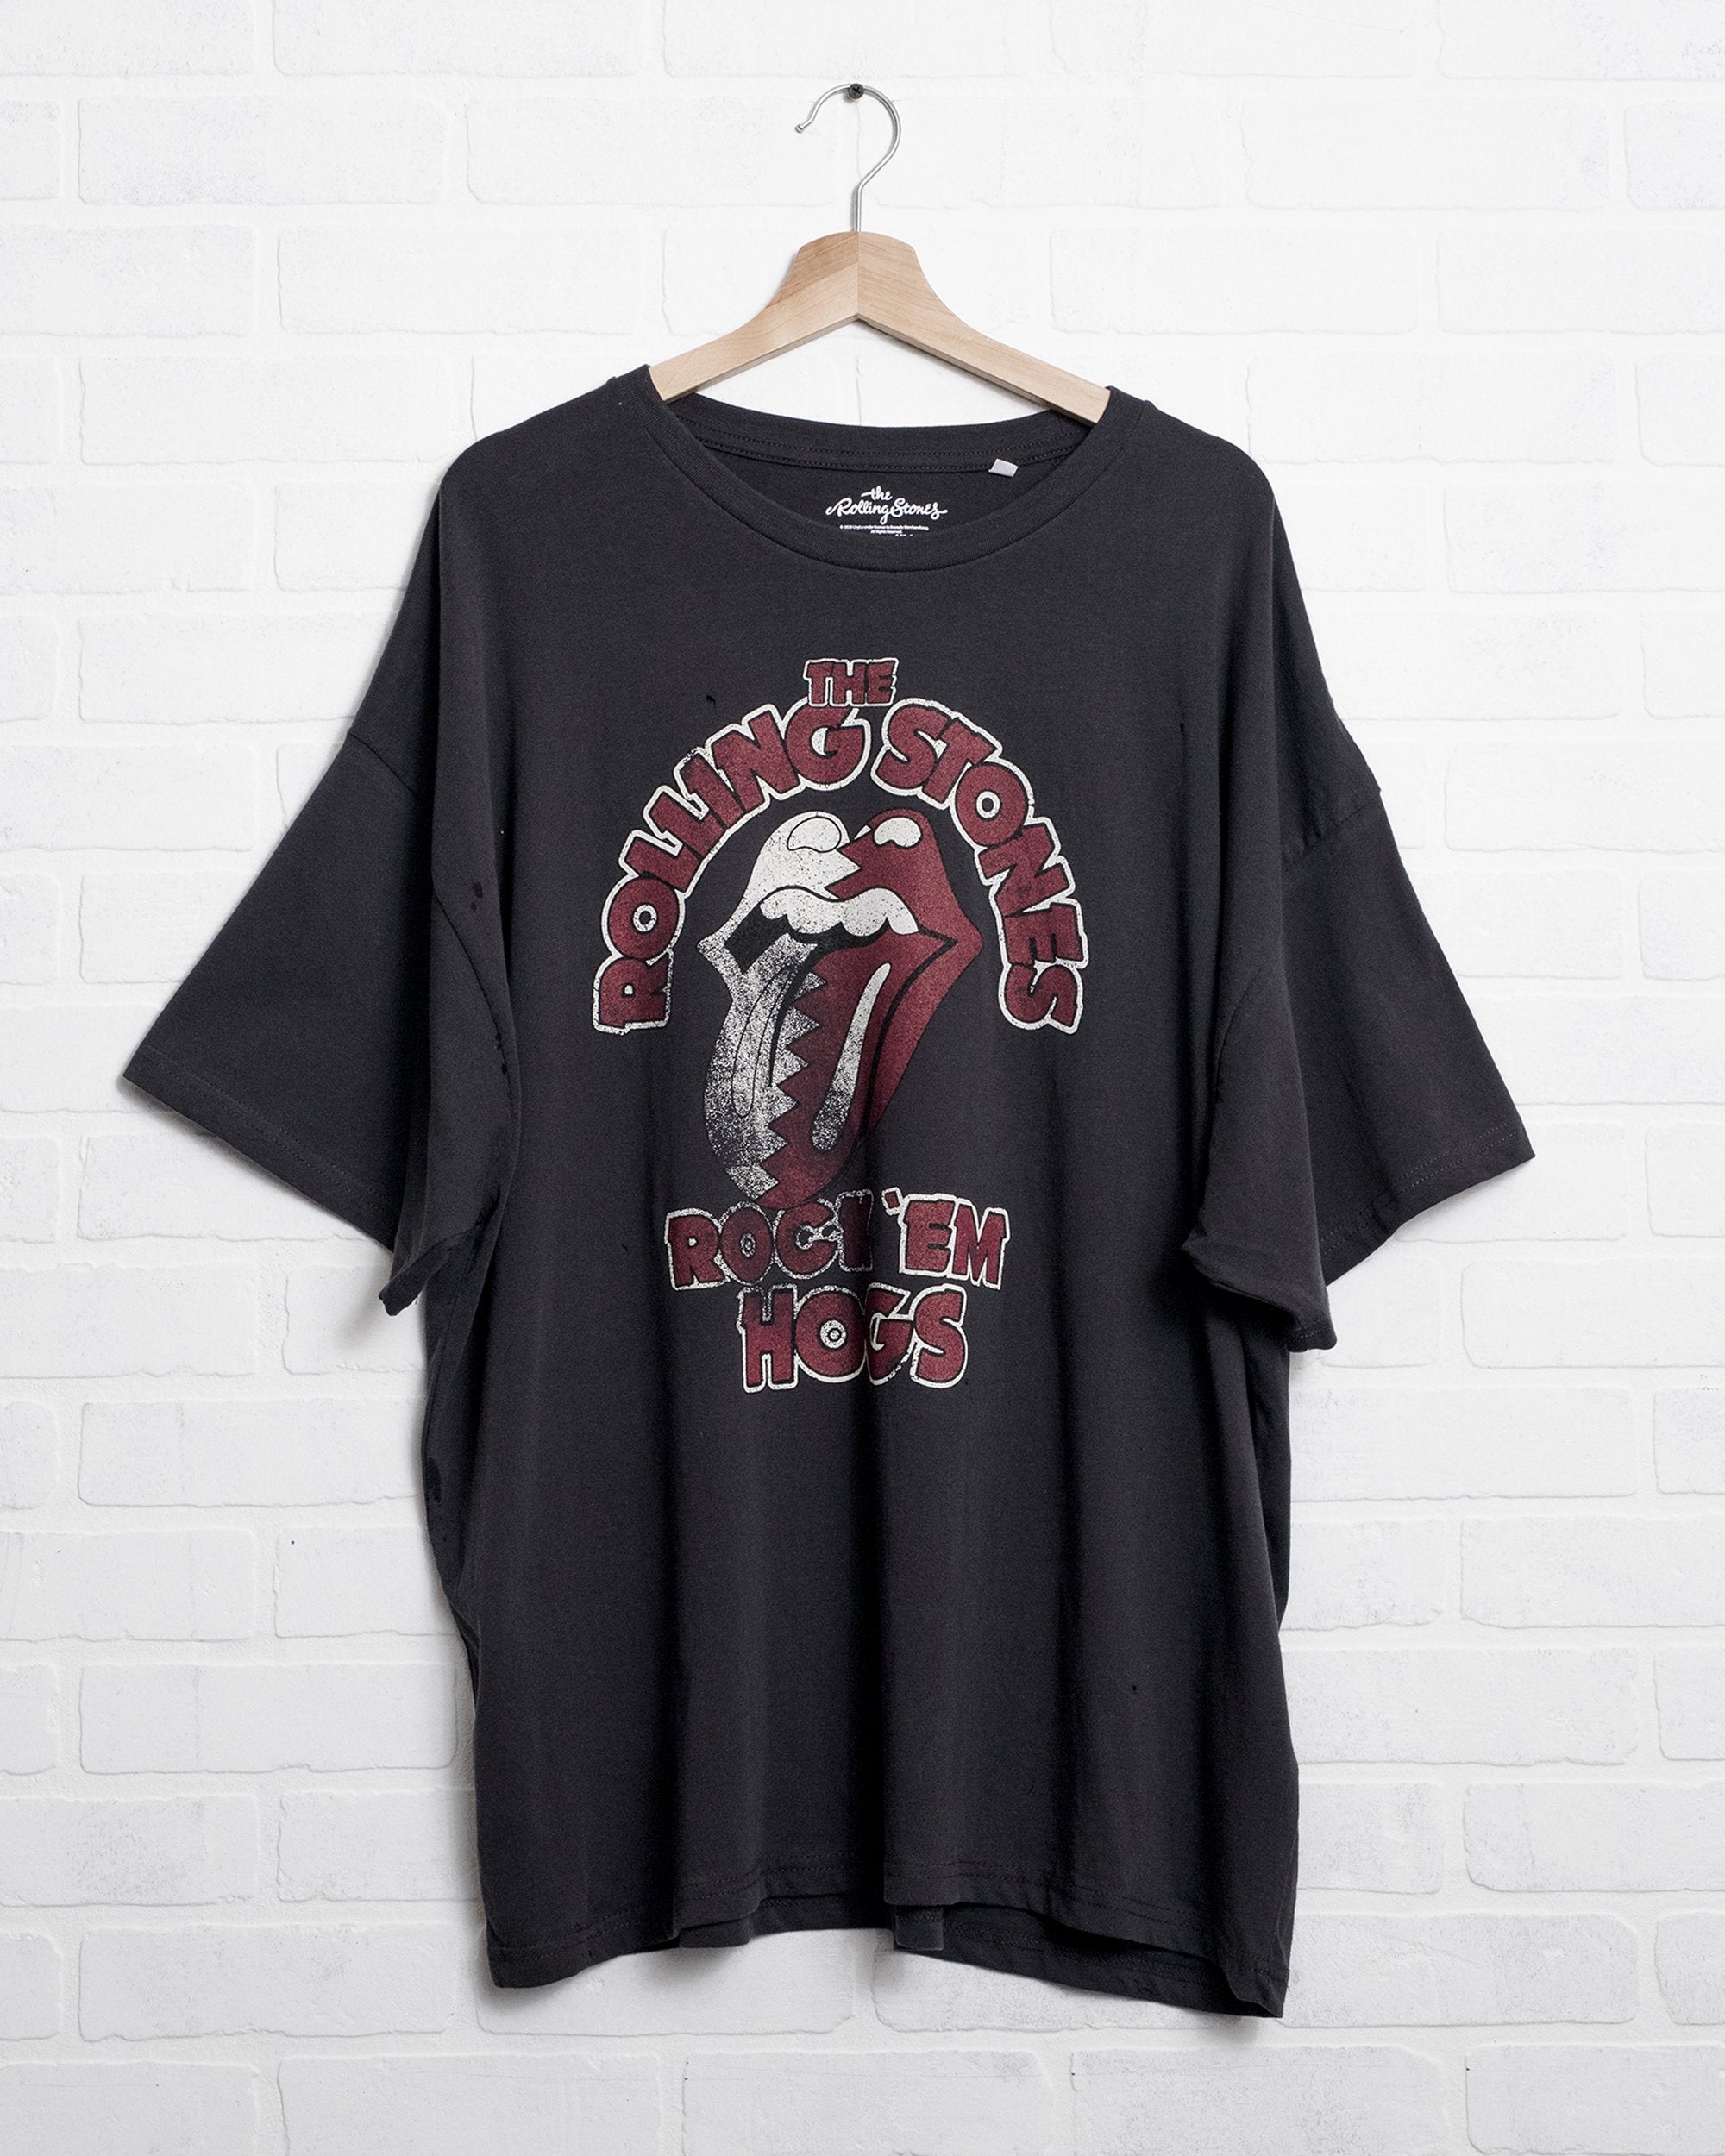 Rolling Stones Rock Em Hogs Off Black Oversized Tee - shoplivylu